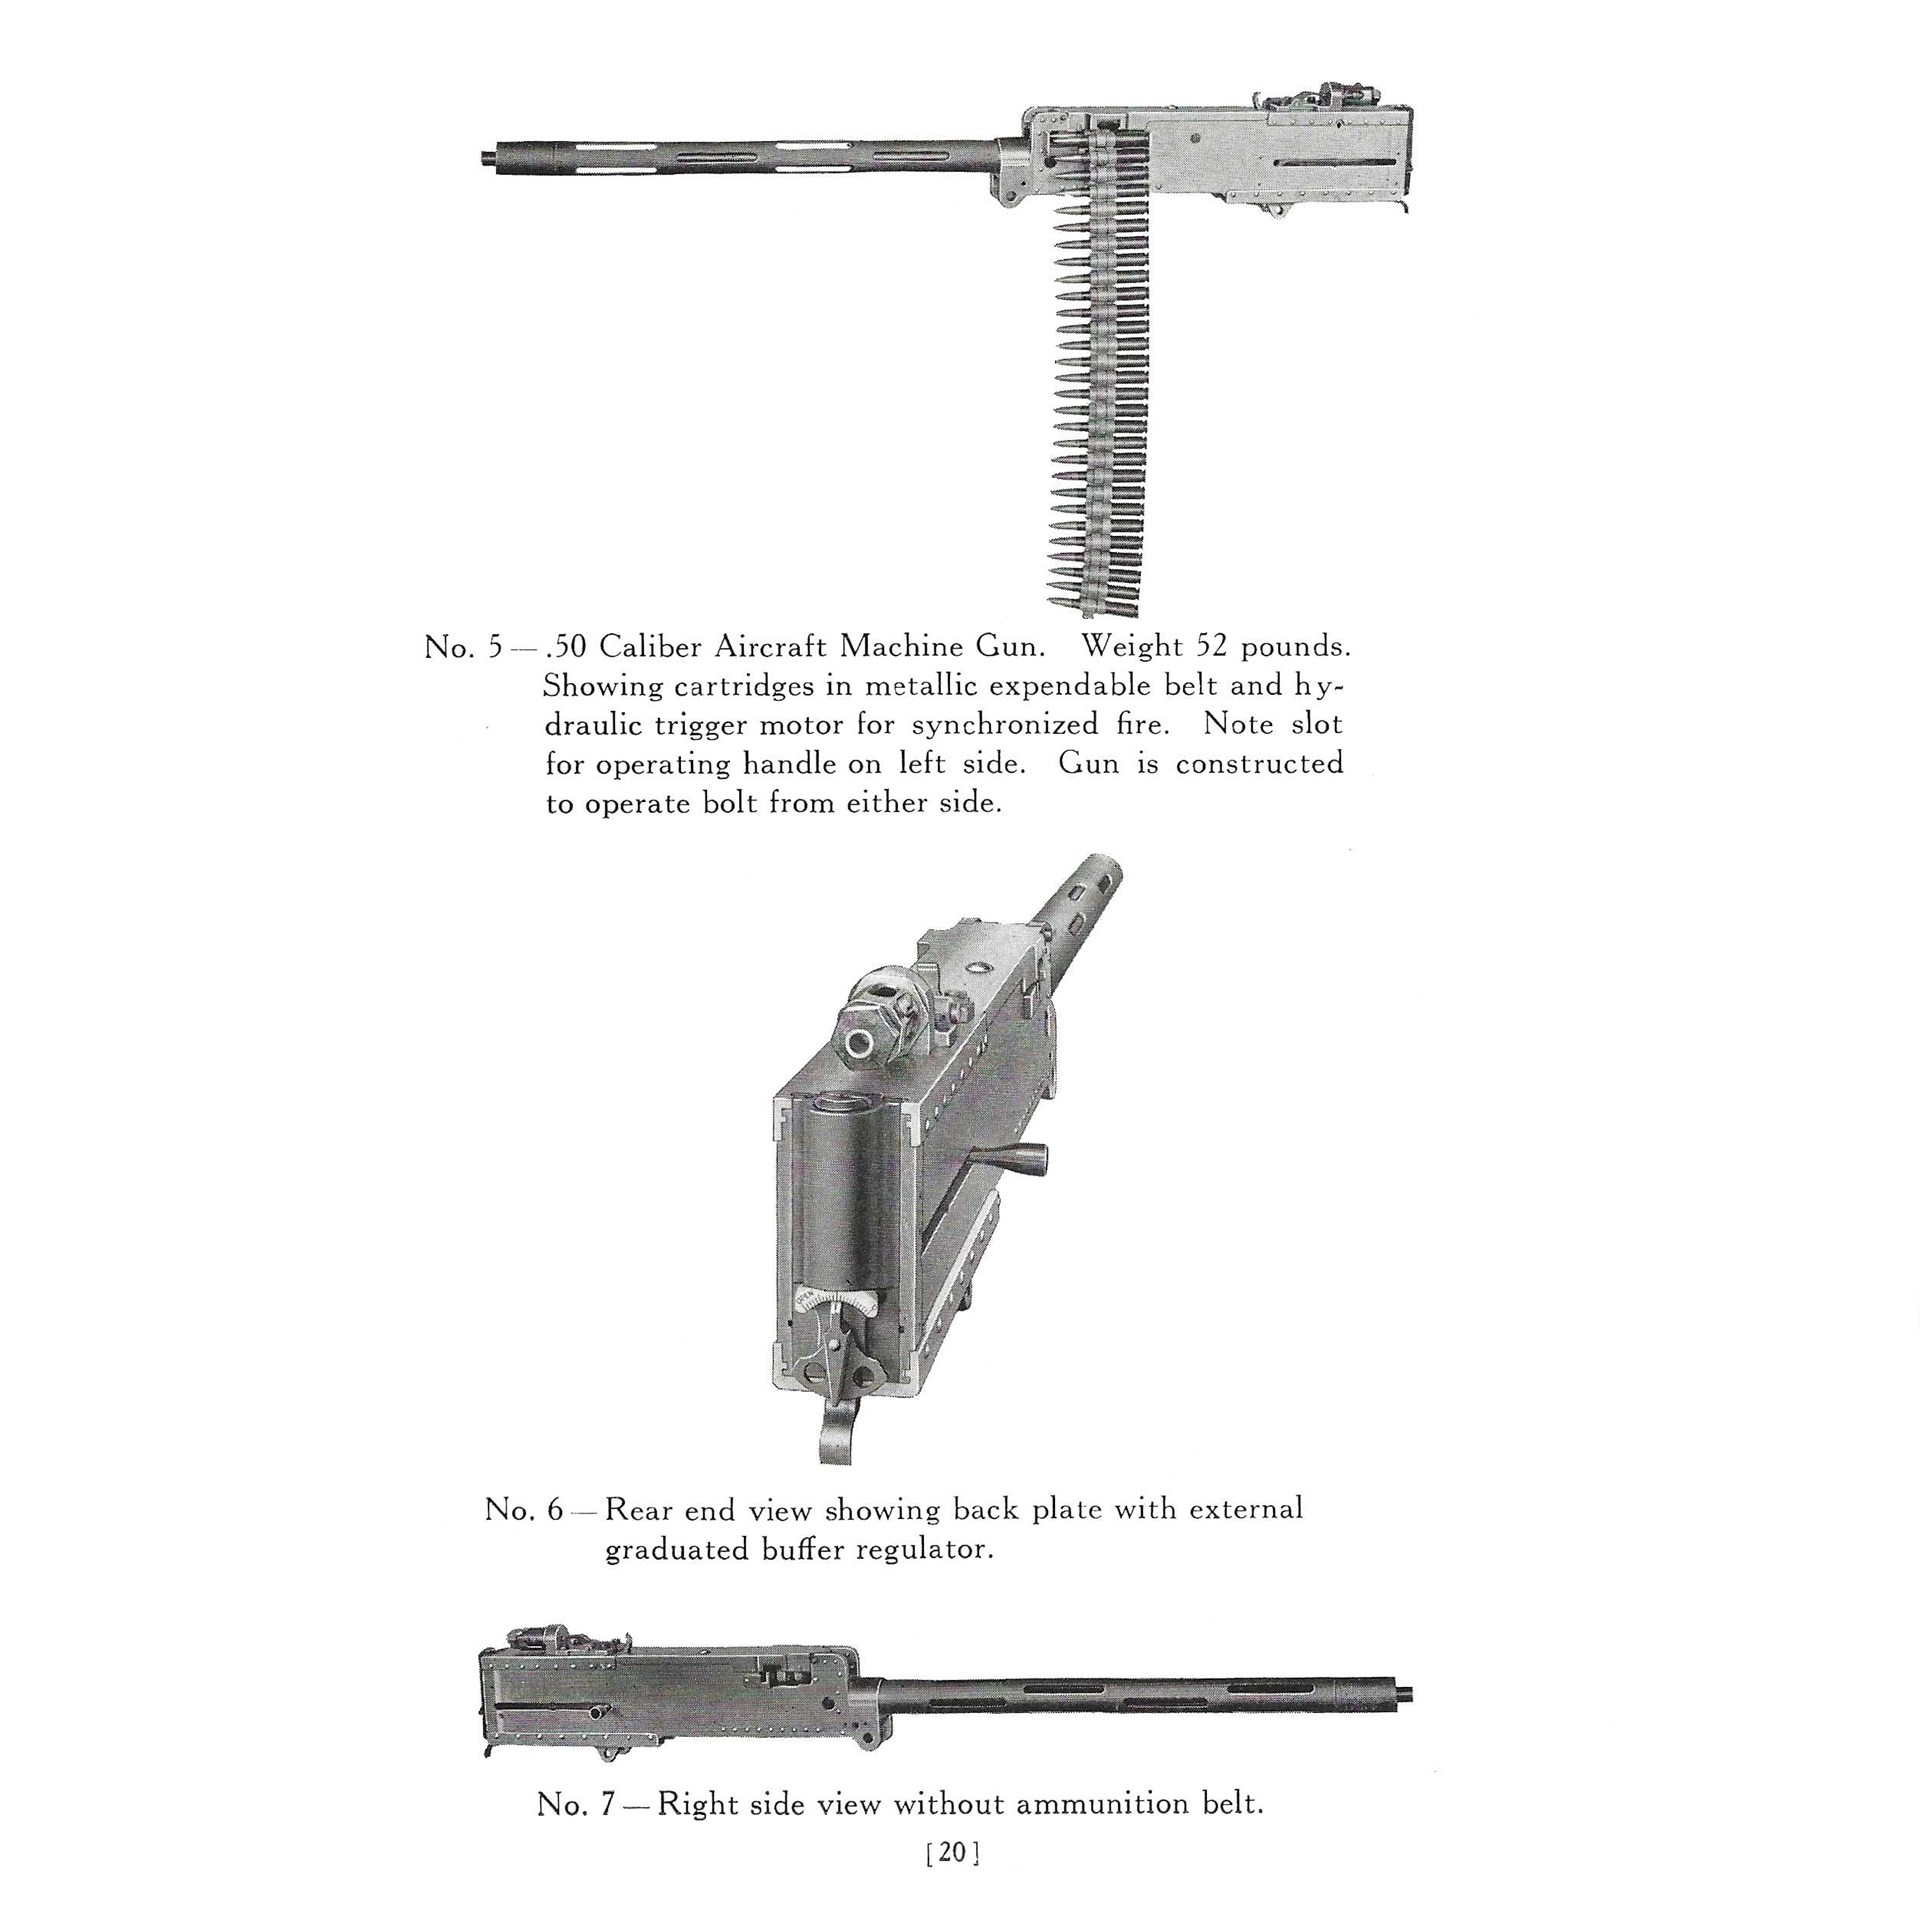 Details of the Colt Model 1924 Aircraft Machine Gun